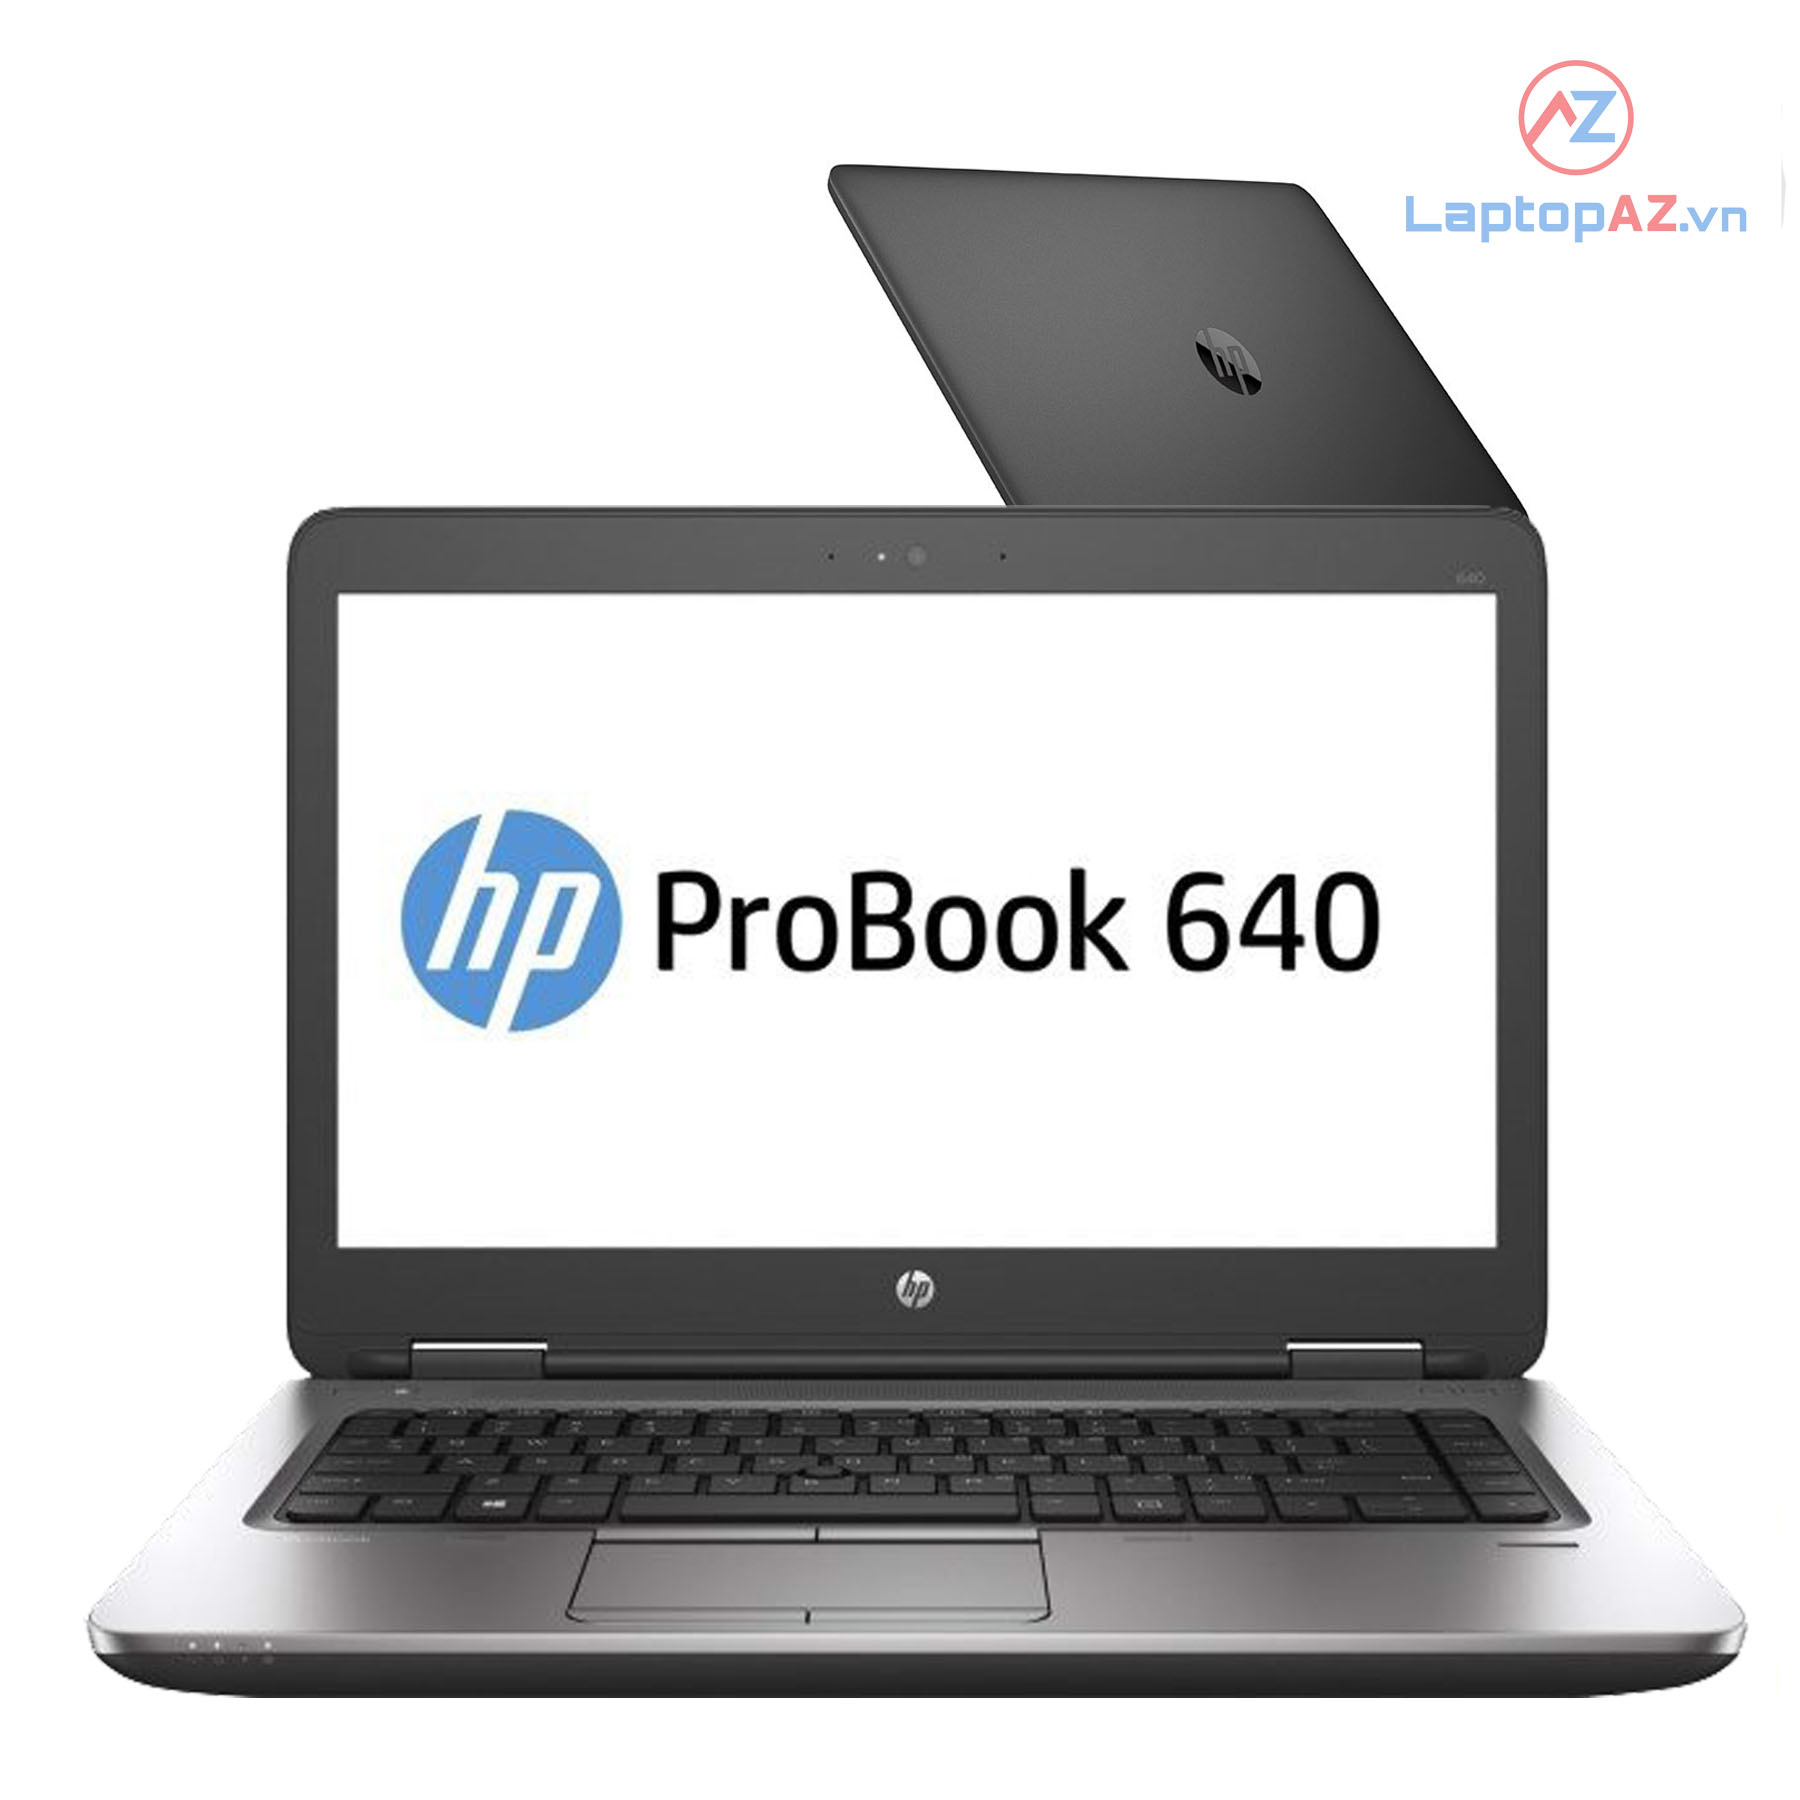 Laptop HP Probook 640 G1 (Core i5-4310M, 4GB, 128GB, Intel HD Graphics, 14 inch HD)